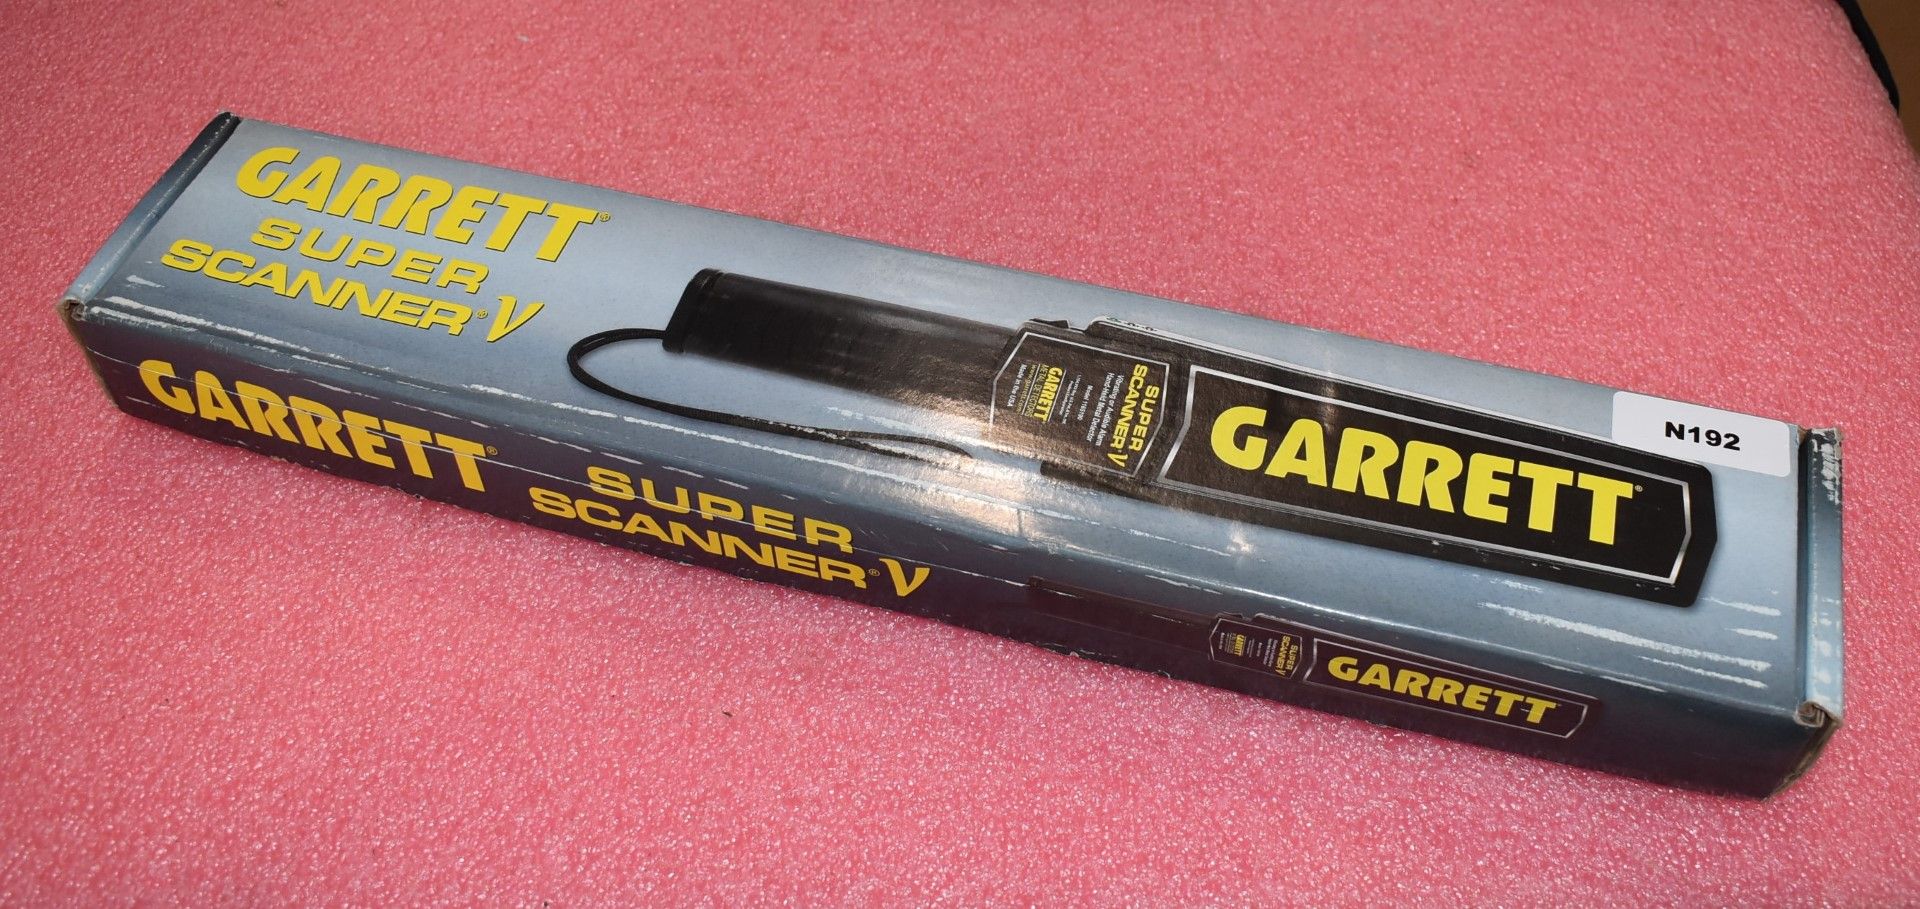 1 x Garrett Super Scanner V Vibrating Audible Hand Held Metal Detector - Unused With Original - Image 9 of 9